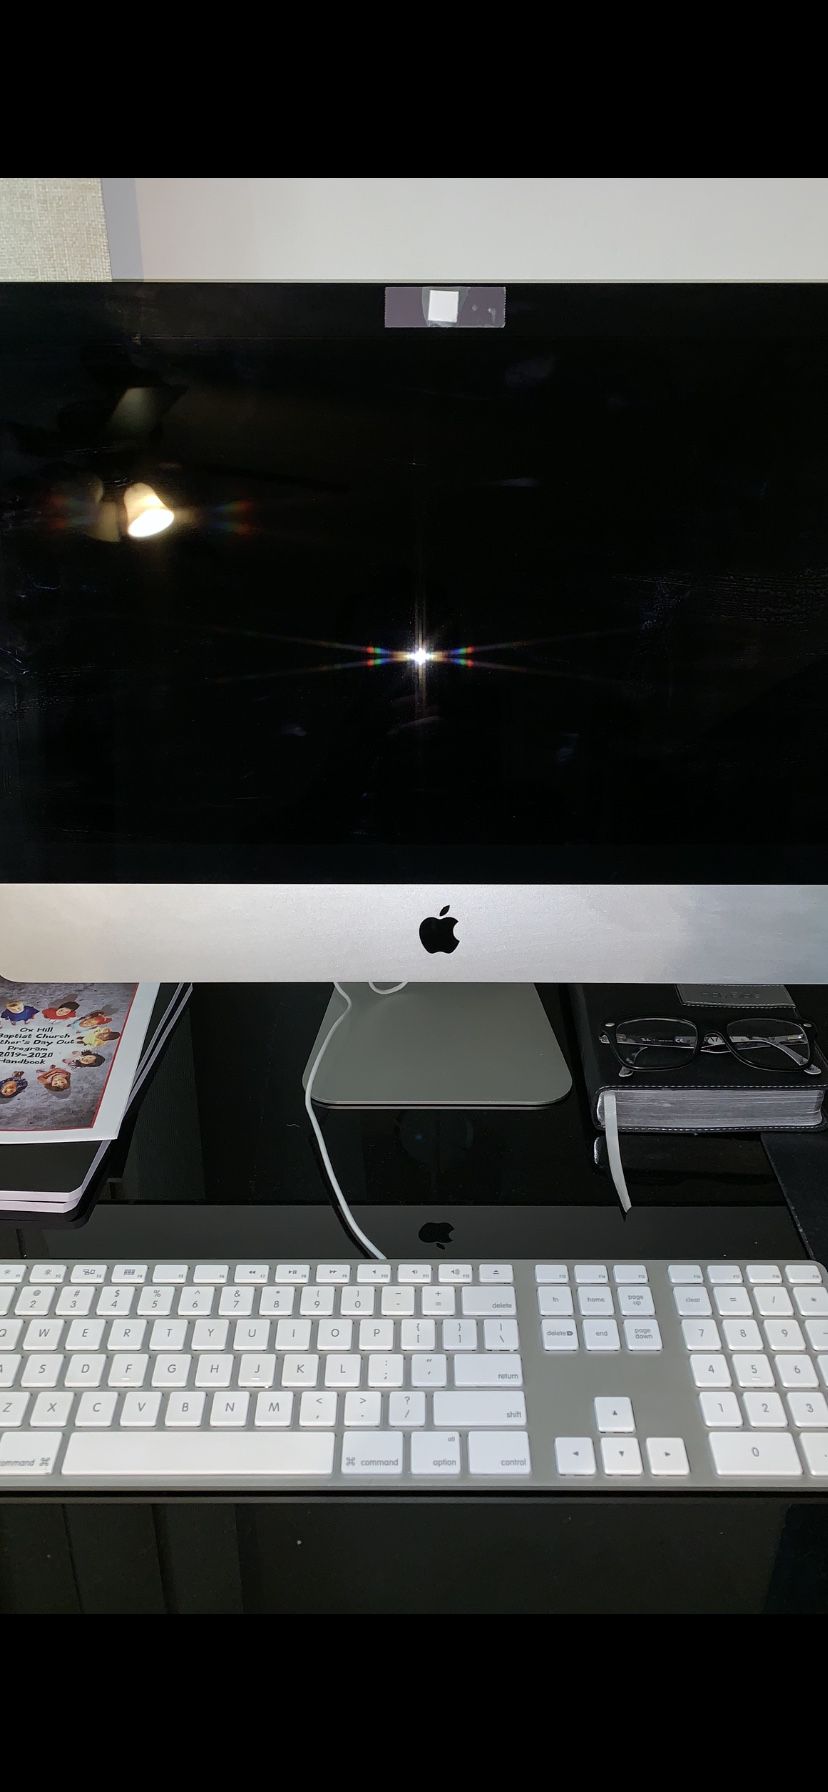 iMac 21.5 inch, i5, 8 gb ram, 1TB Hard Drive, Late 2013 model